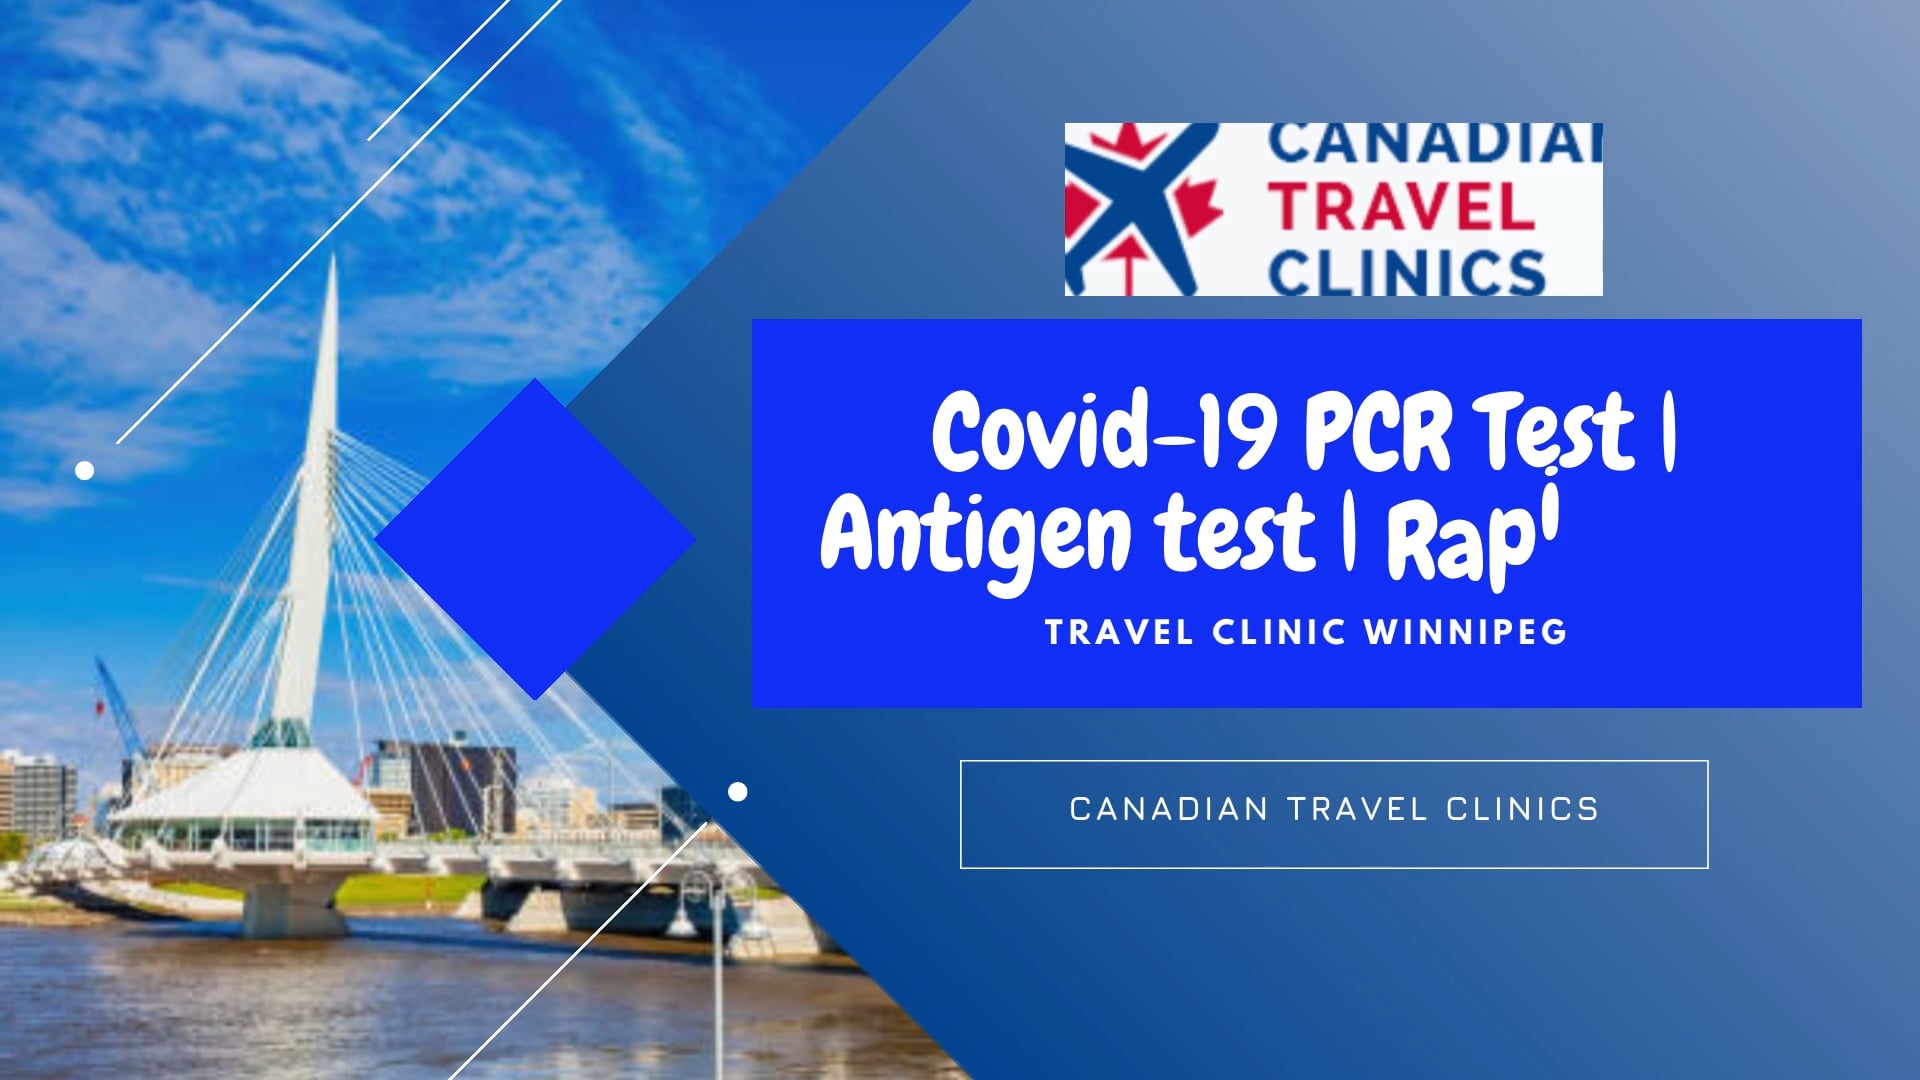 Covid19 PCR Test Antigen Test Rapid Test Canadian